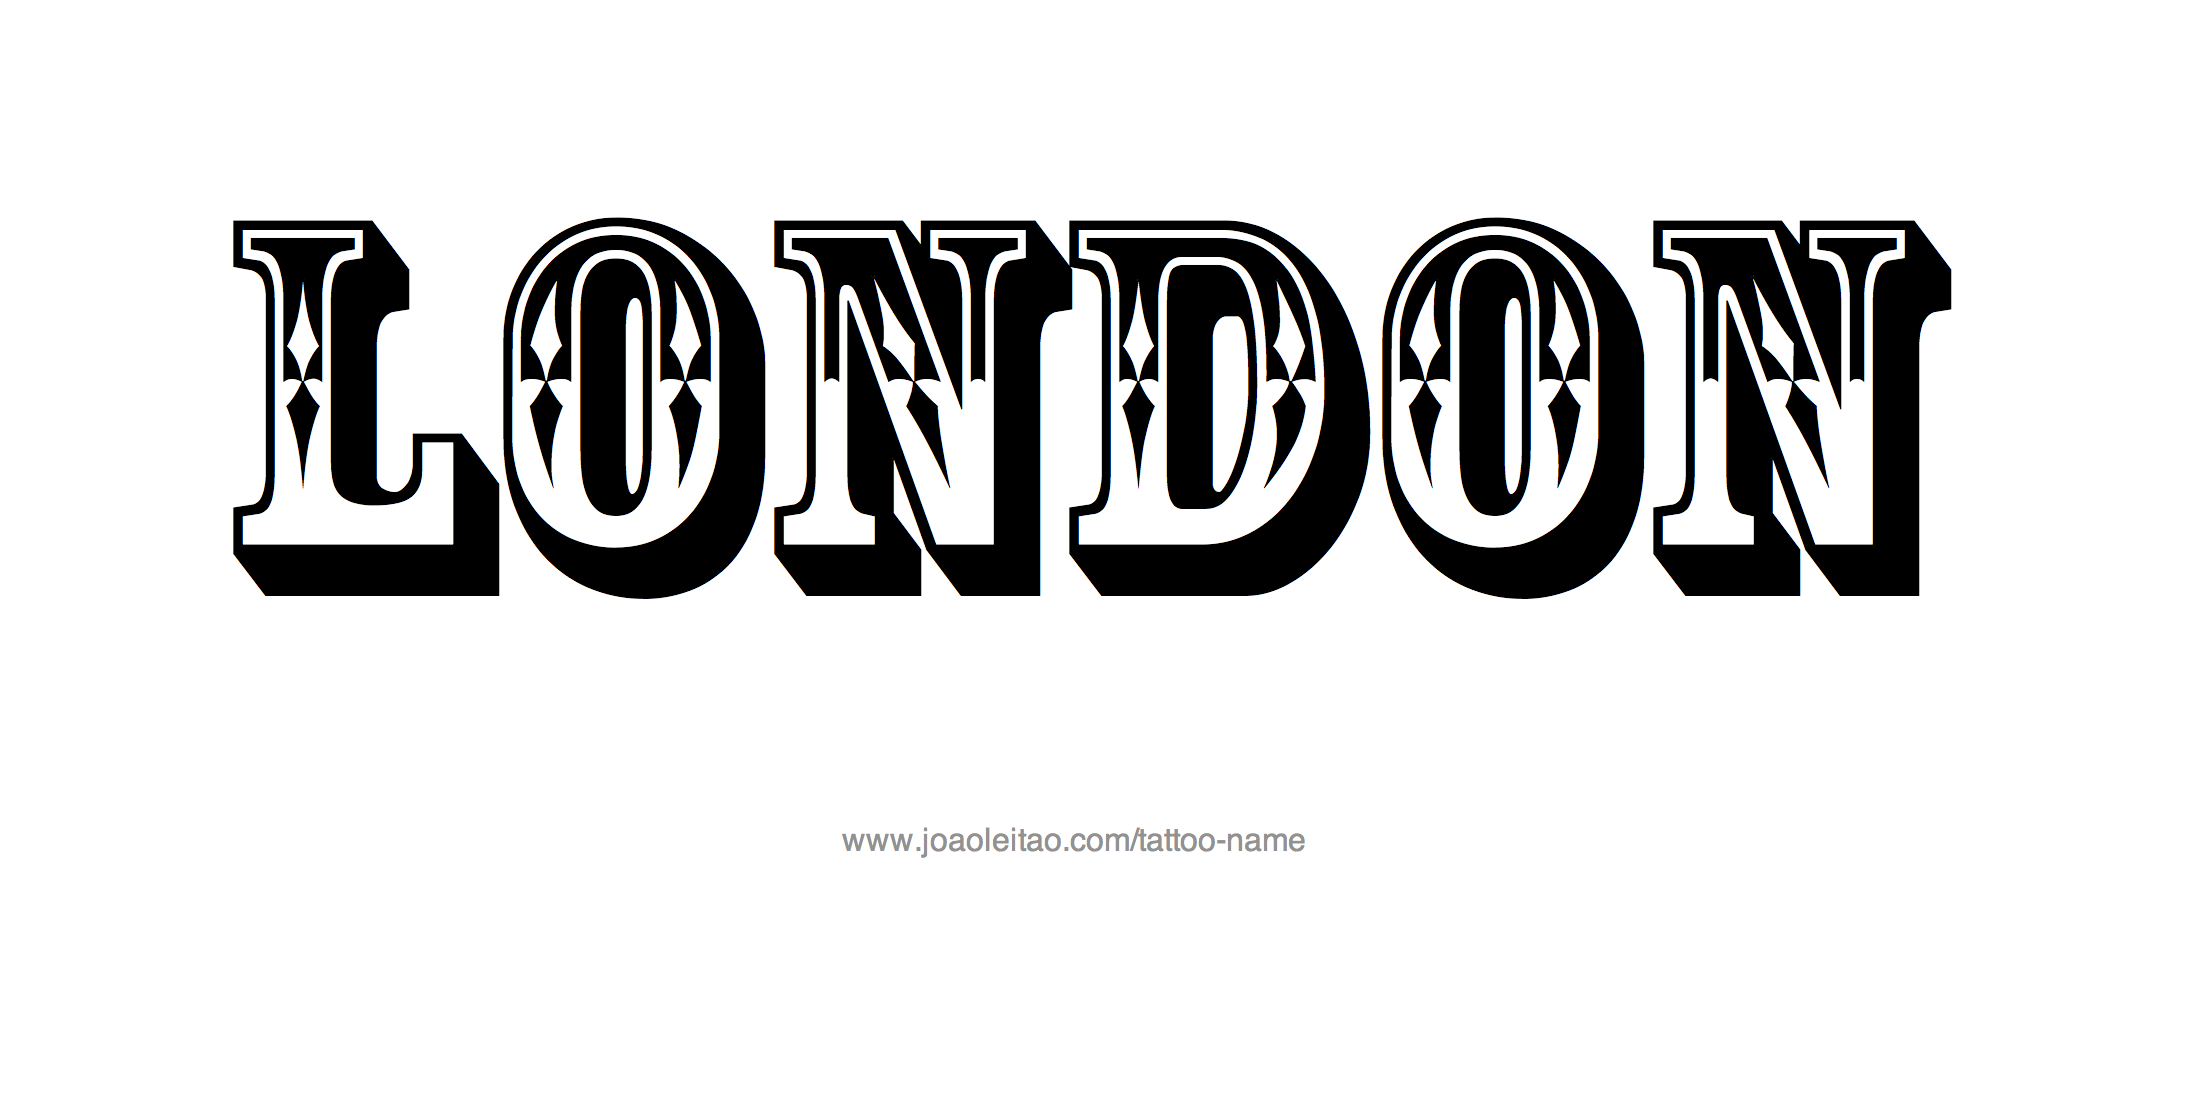 Tattoo Design Name London 